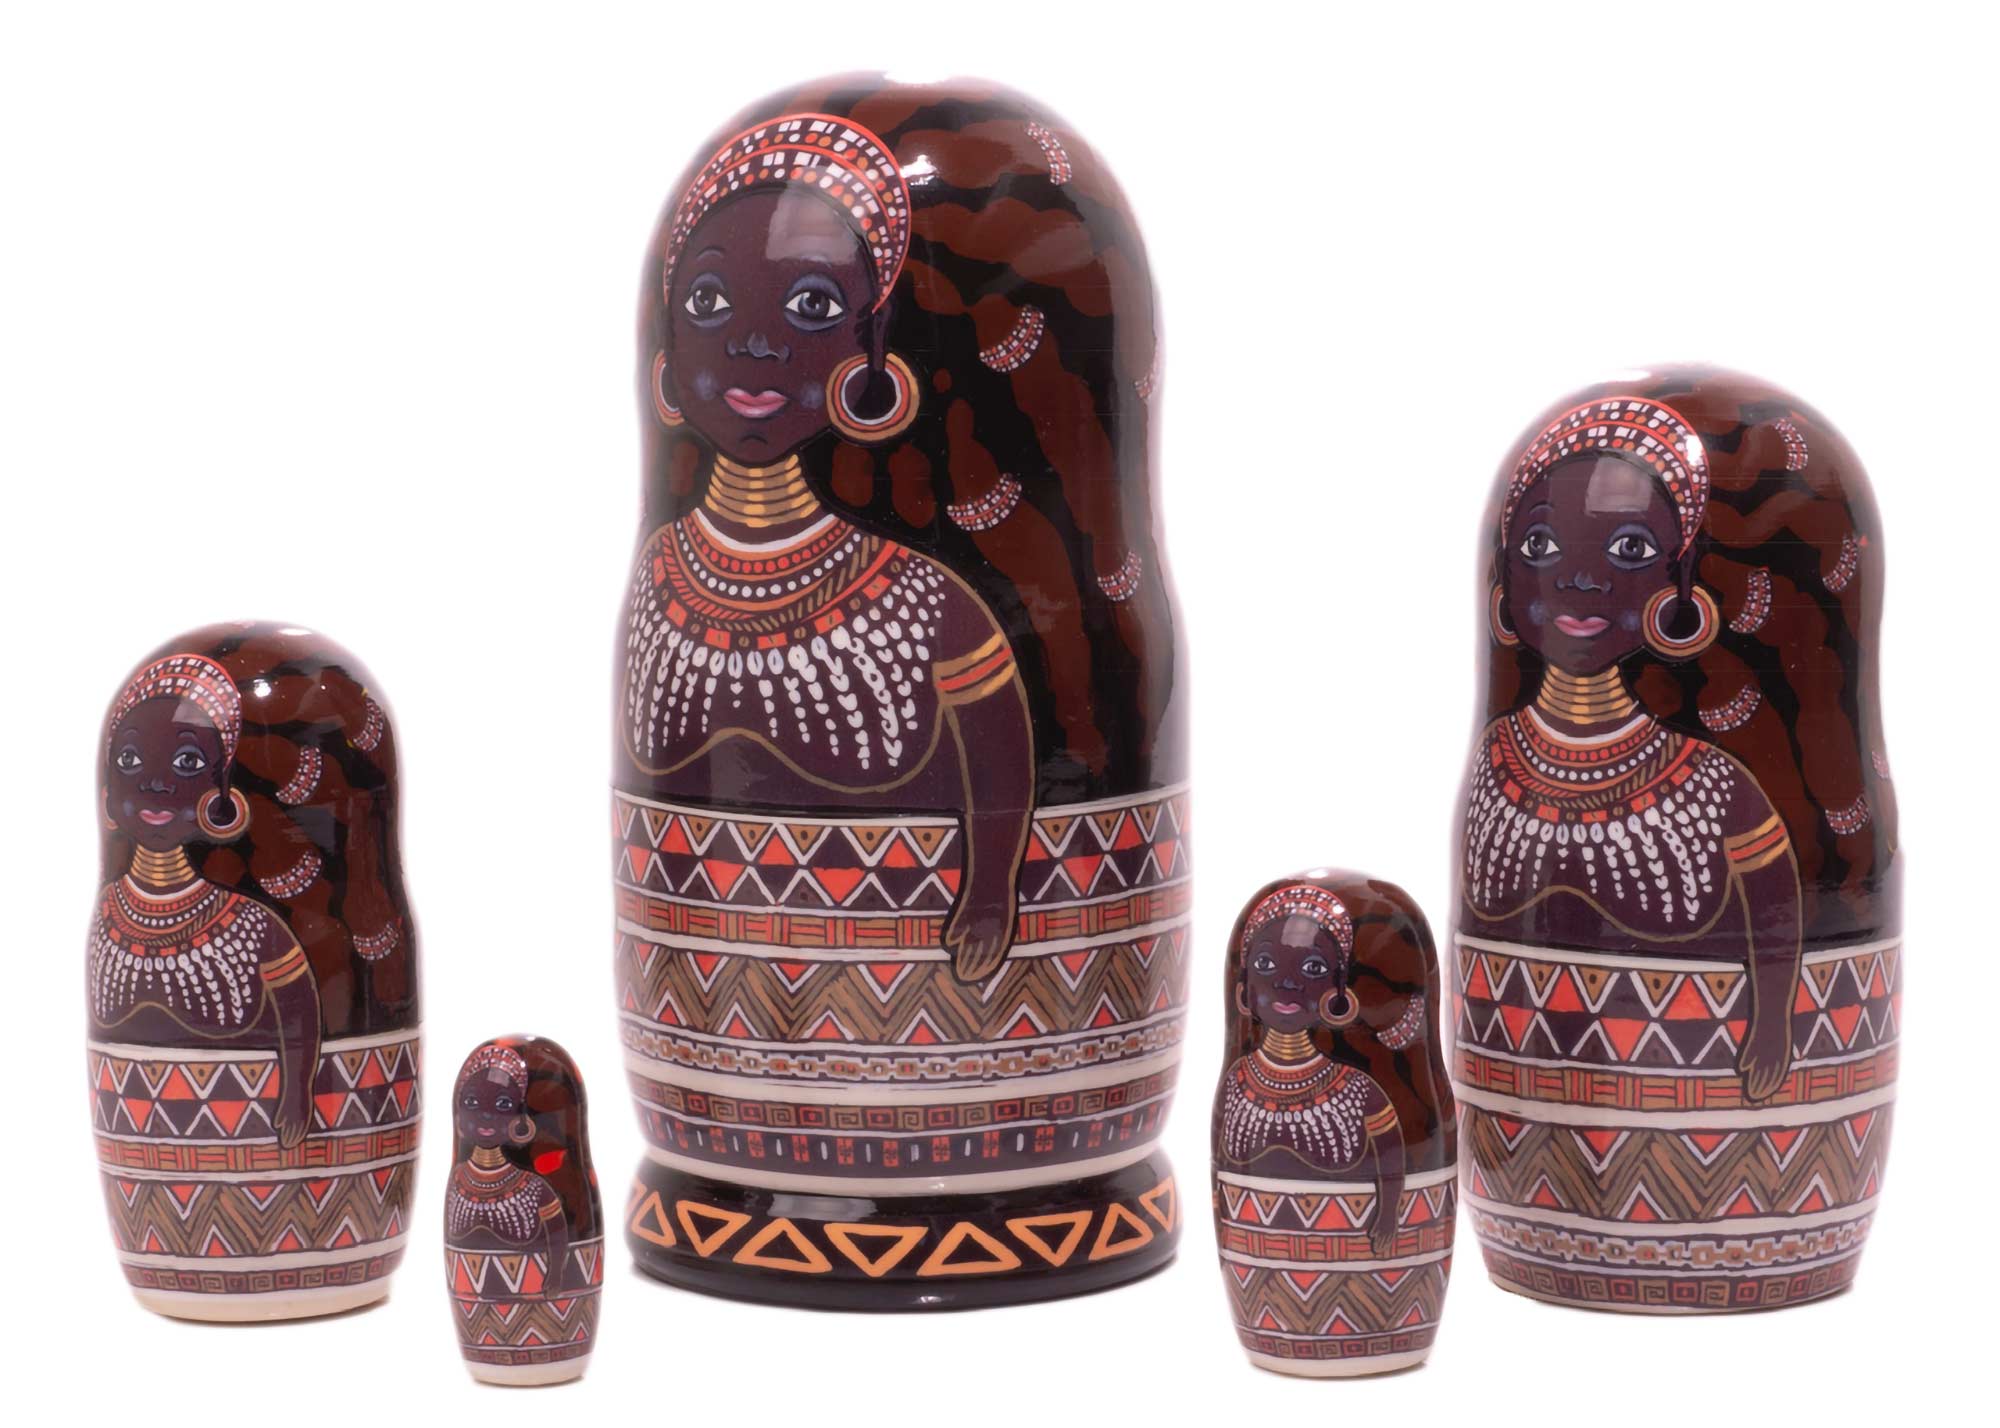 Buy African Queen Nesting Doll 5pc./6" at GoldenCockerel.com